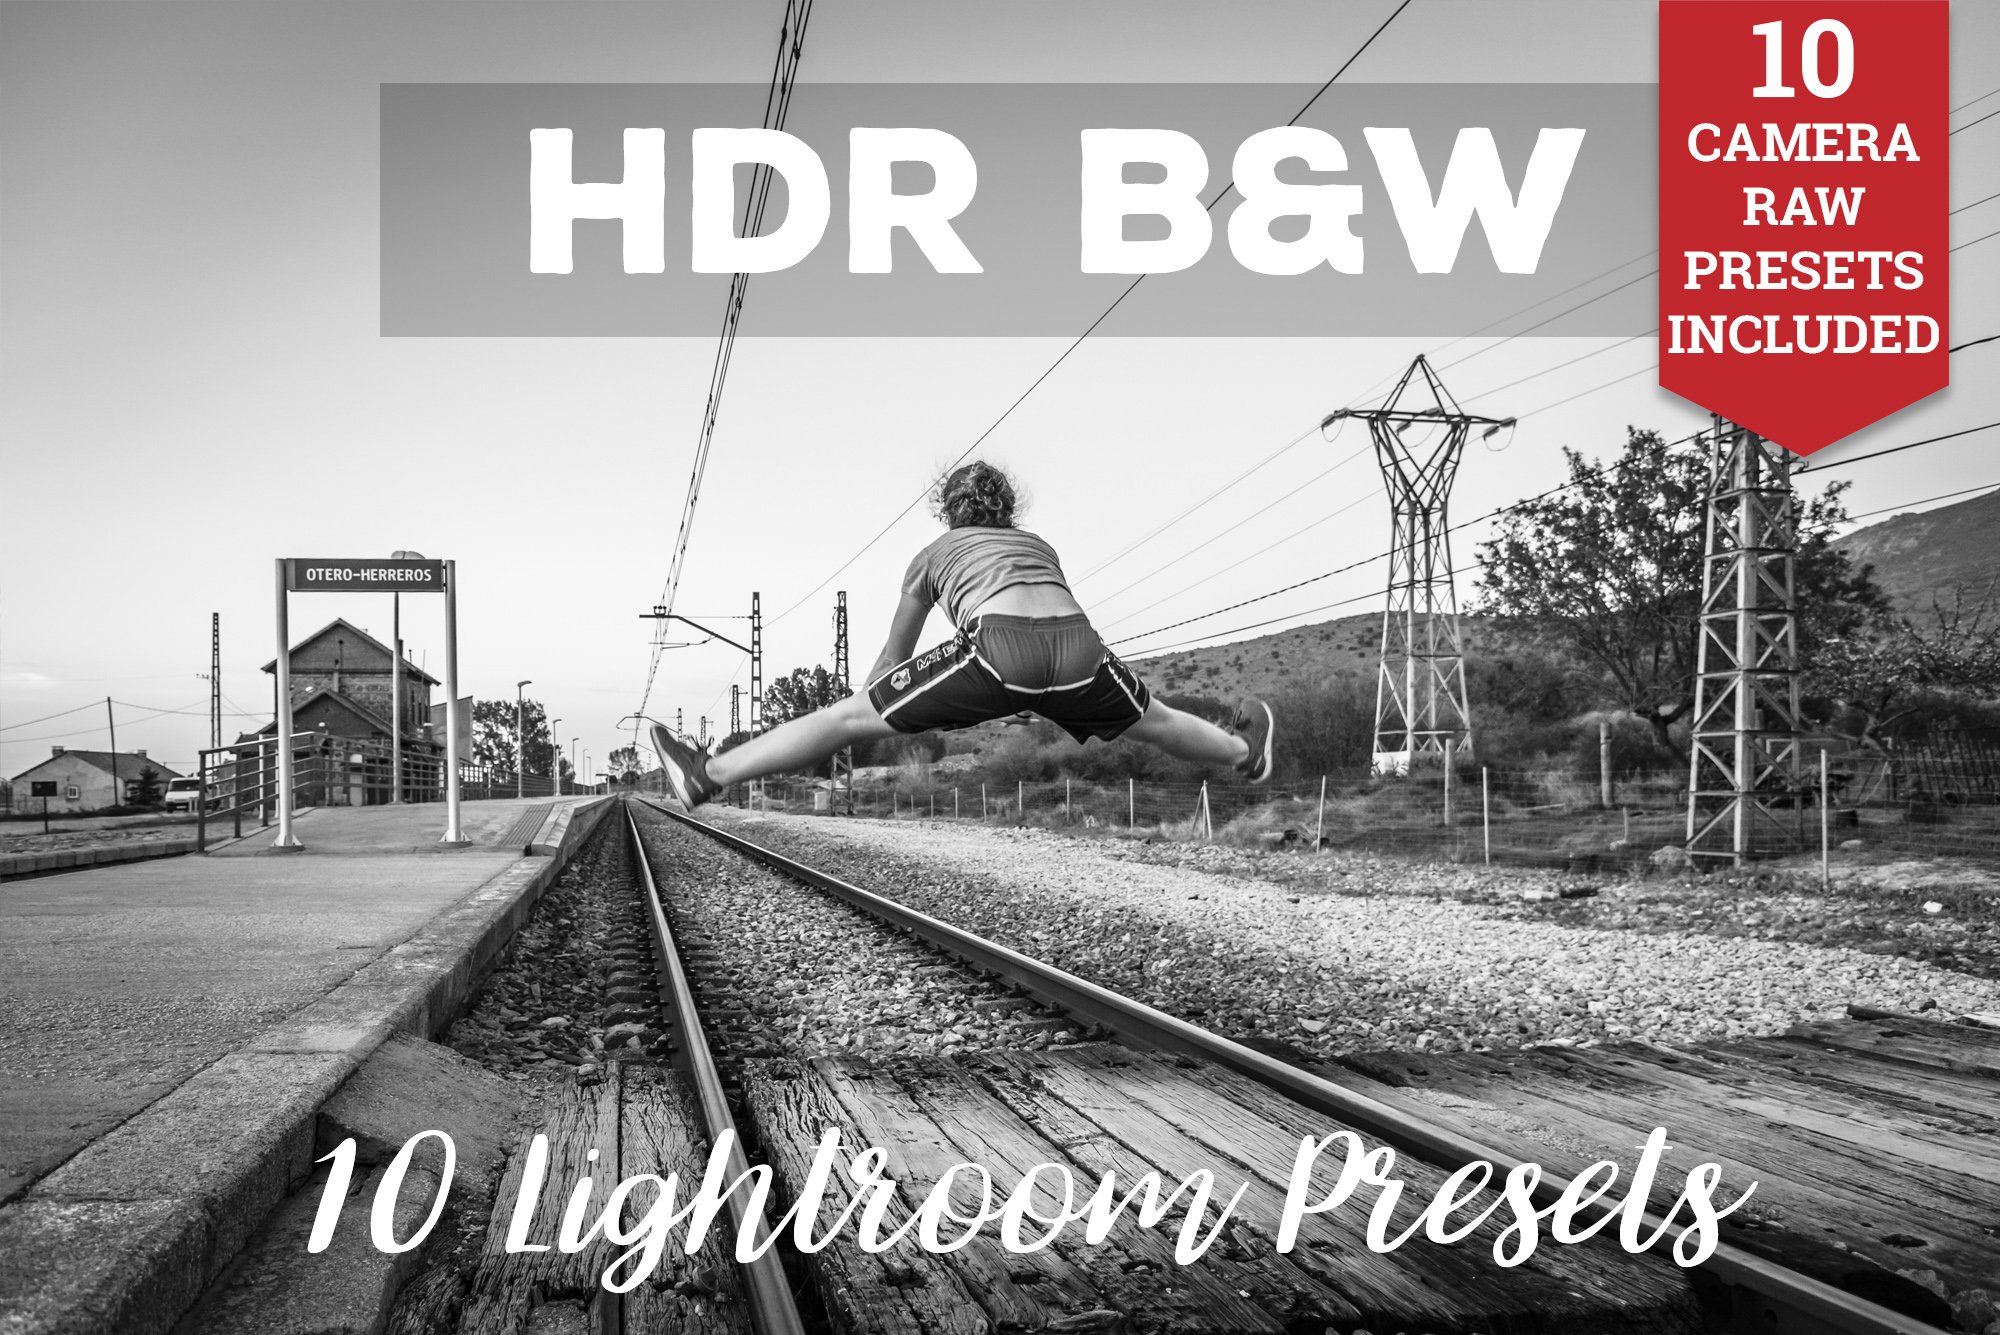 HDR Black and White Lightroom Presetcover image.